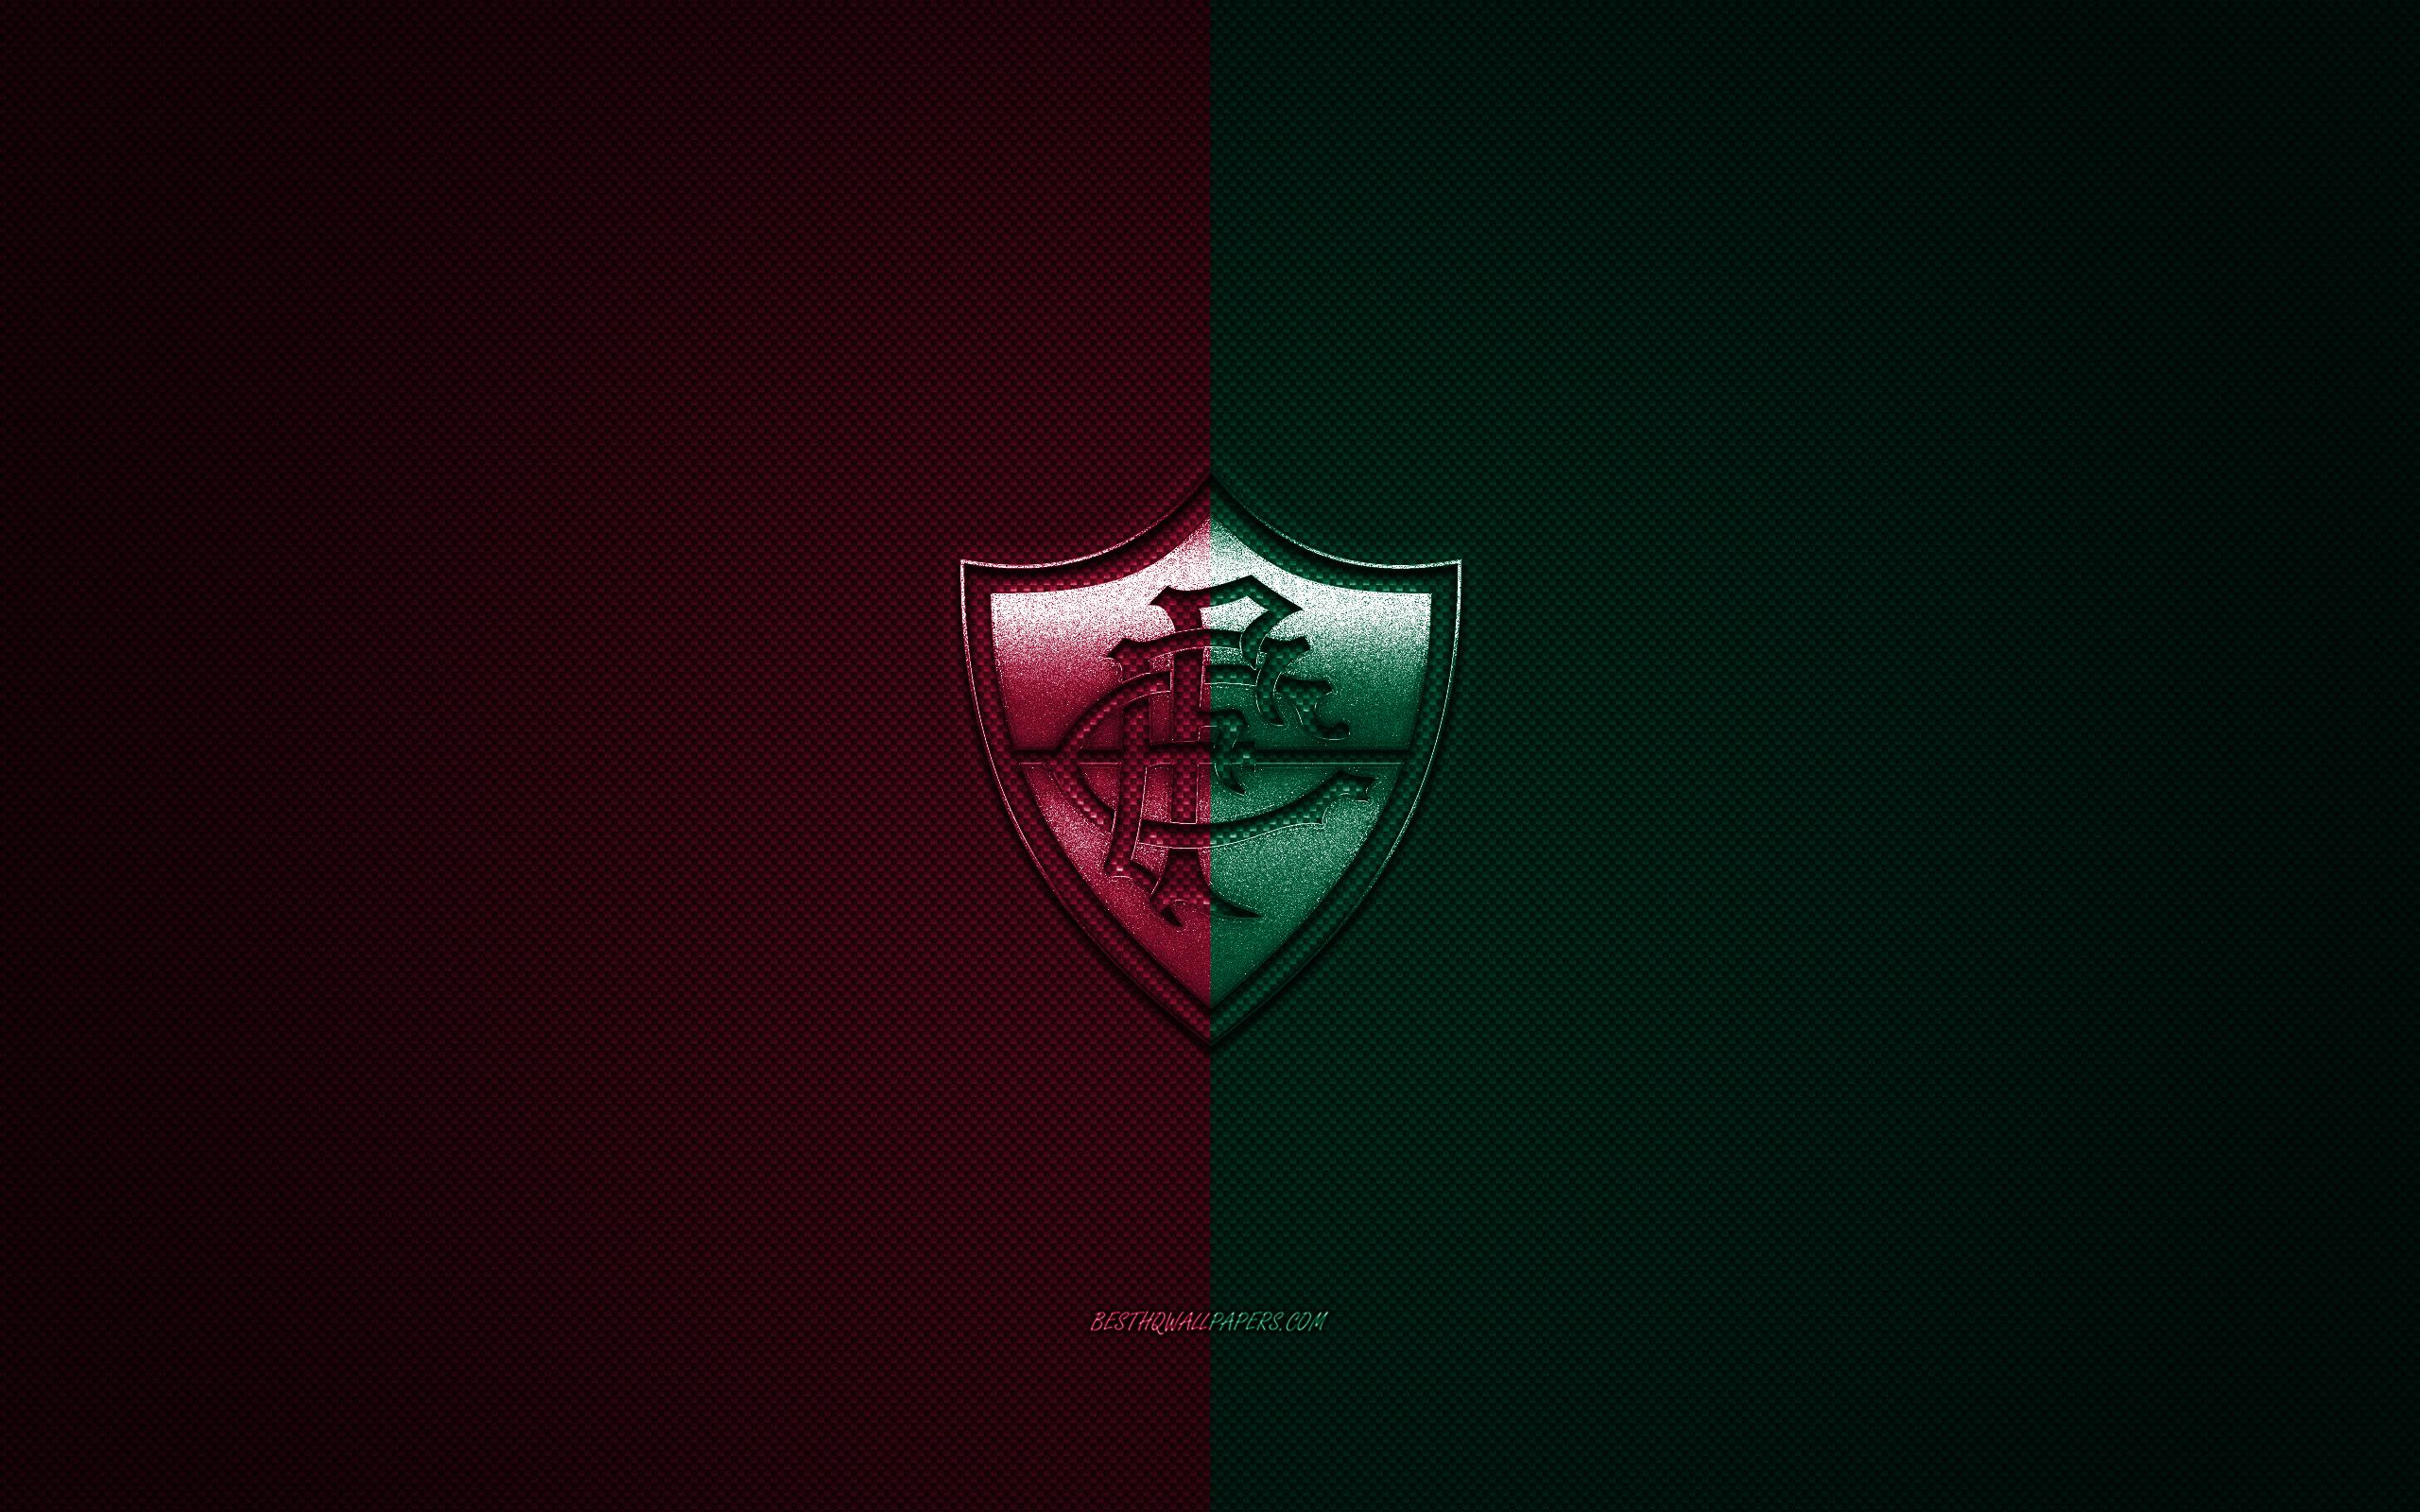 Download wallpaper Fluminense FC, Brazilian football club, Serie